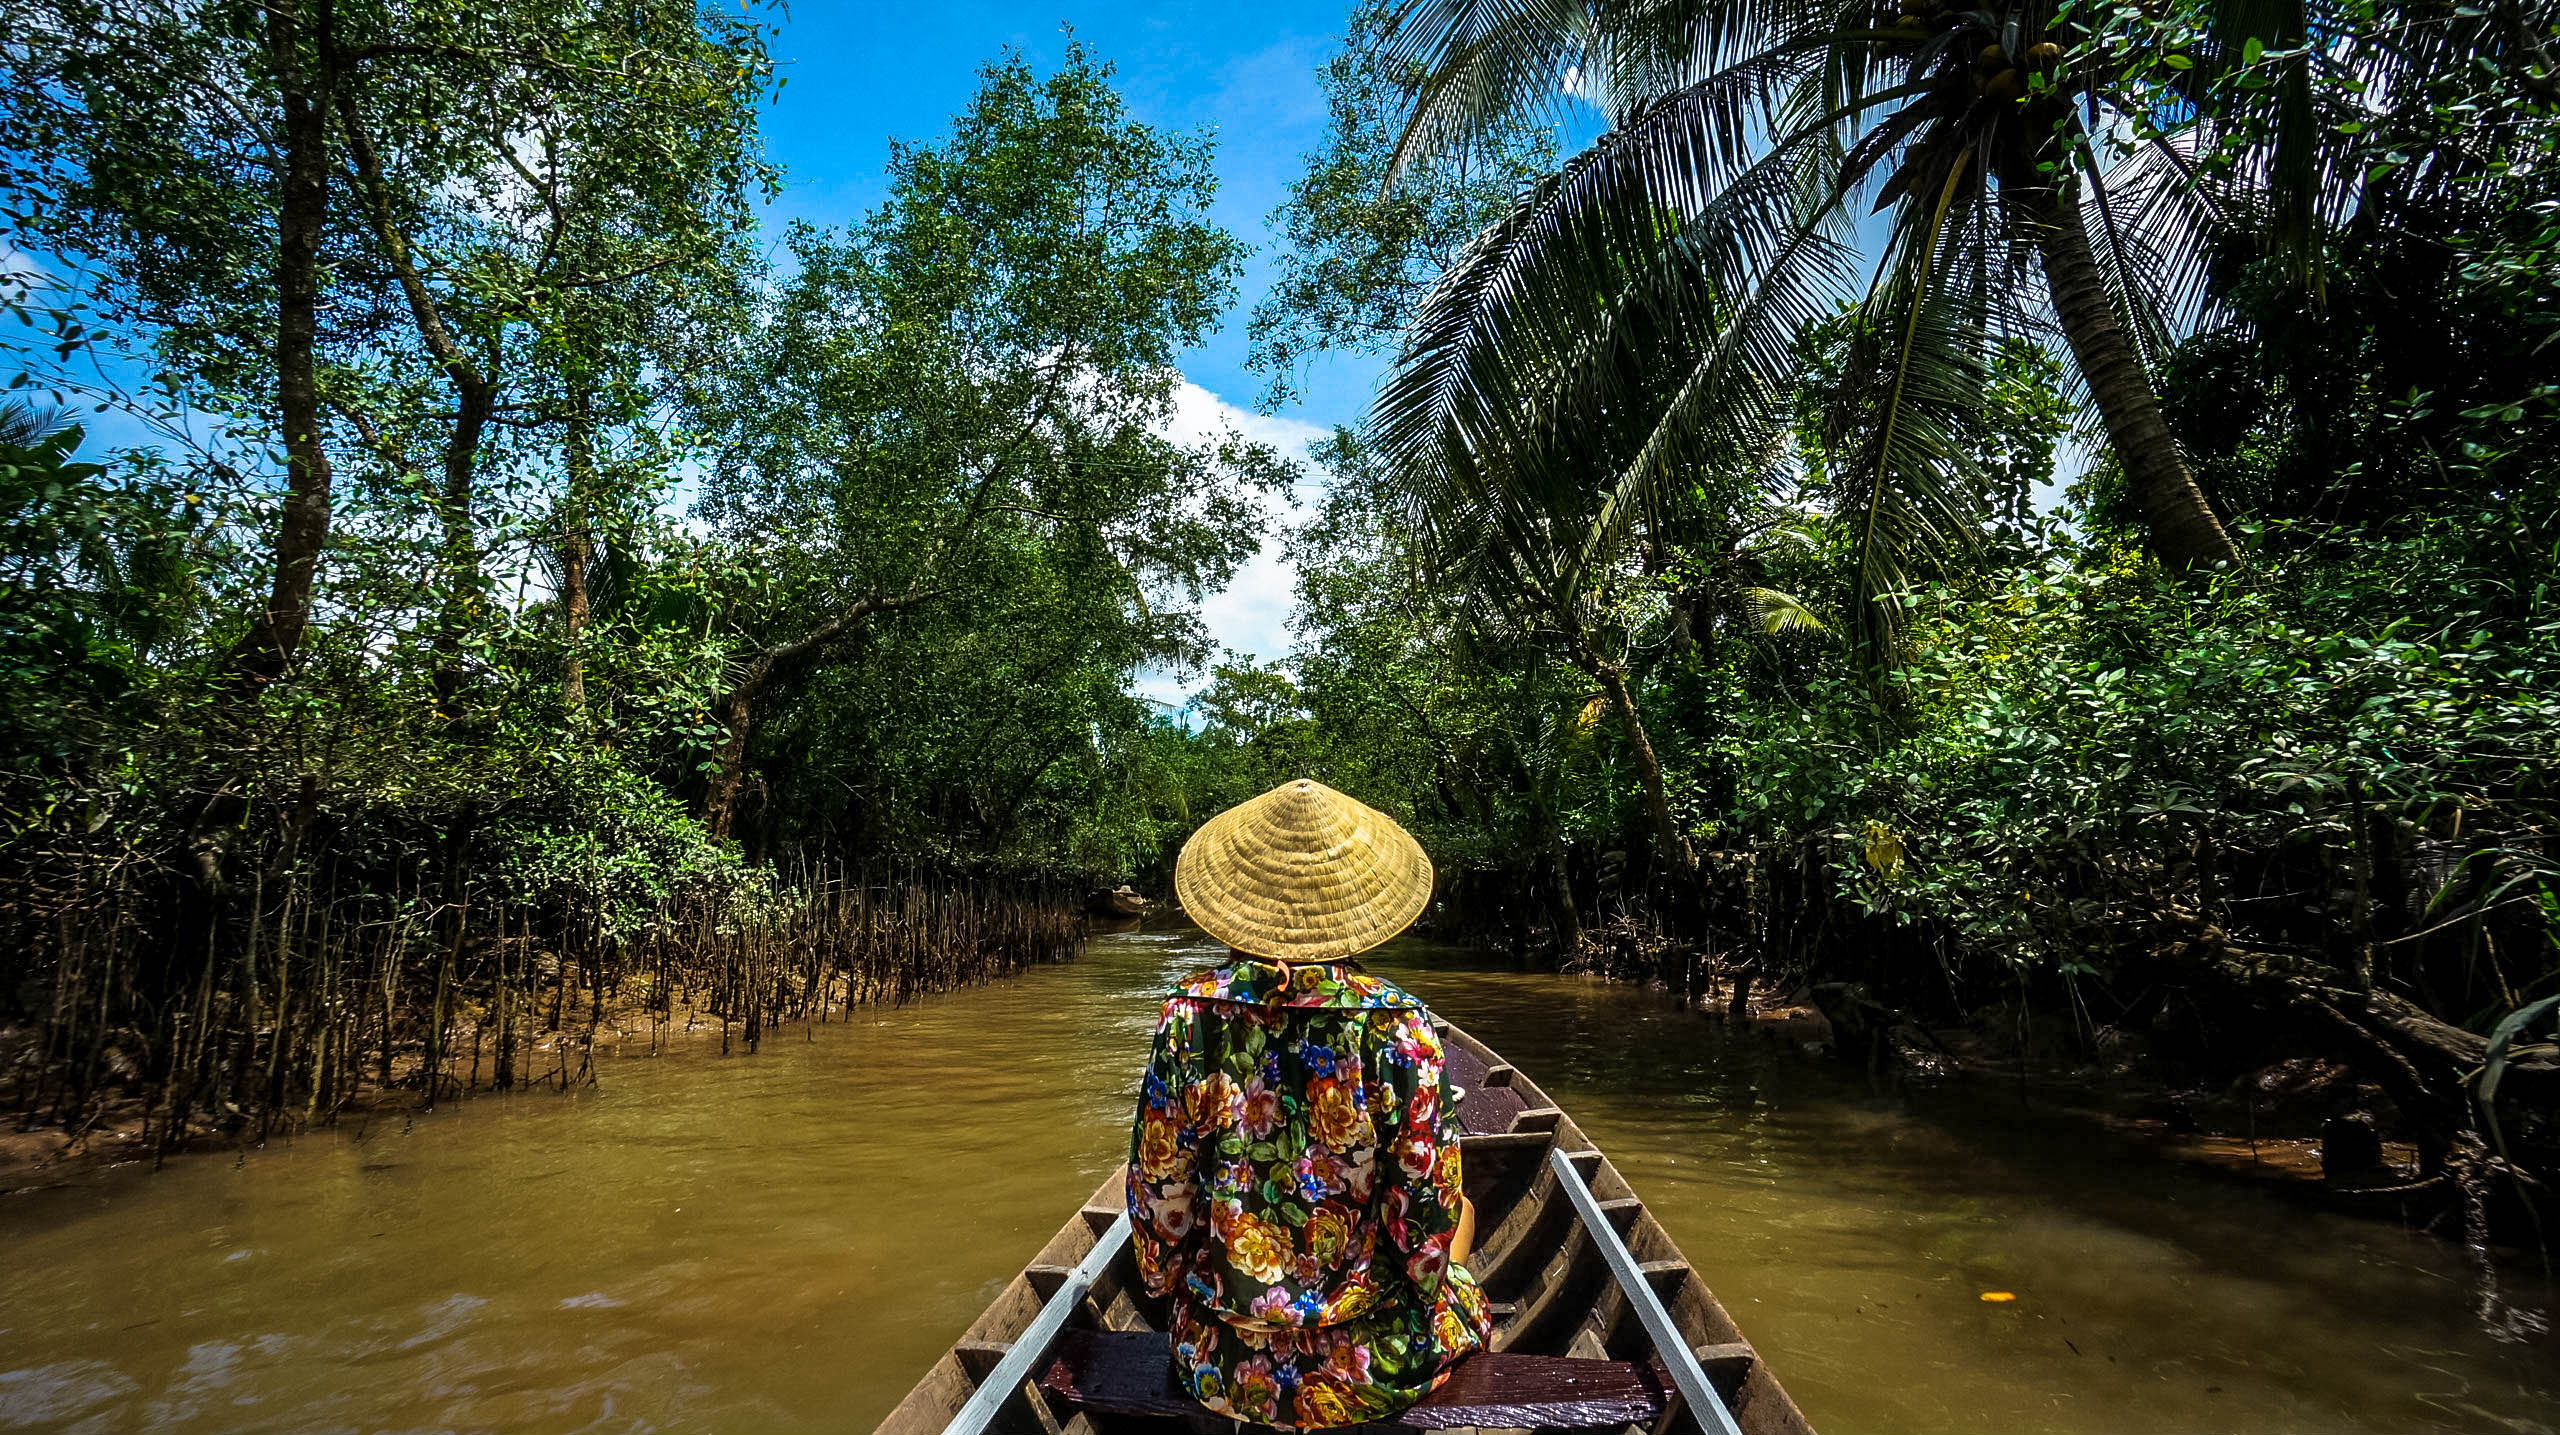 Onwards: Mekong River Delta, Vietnam